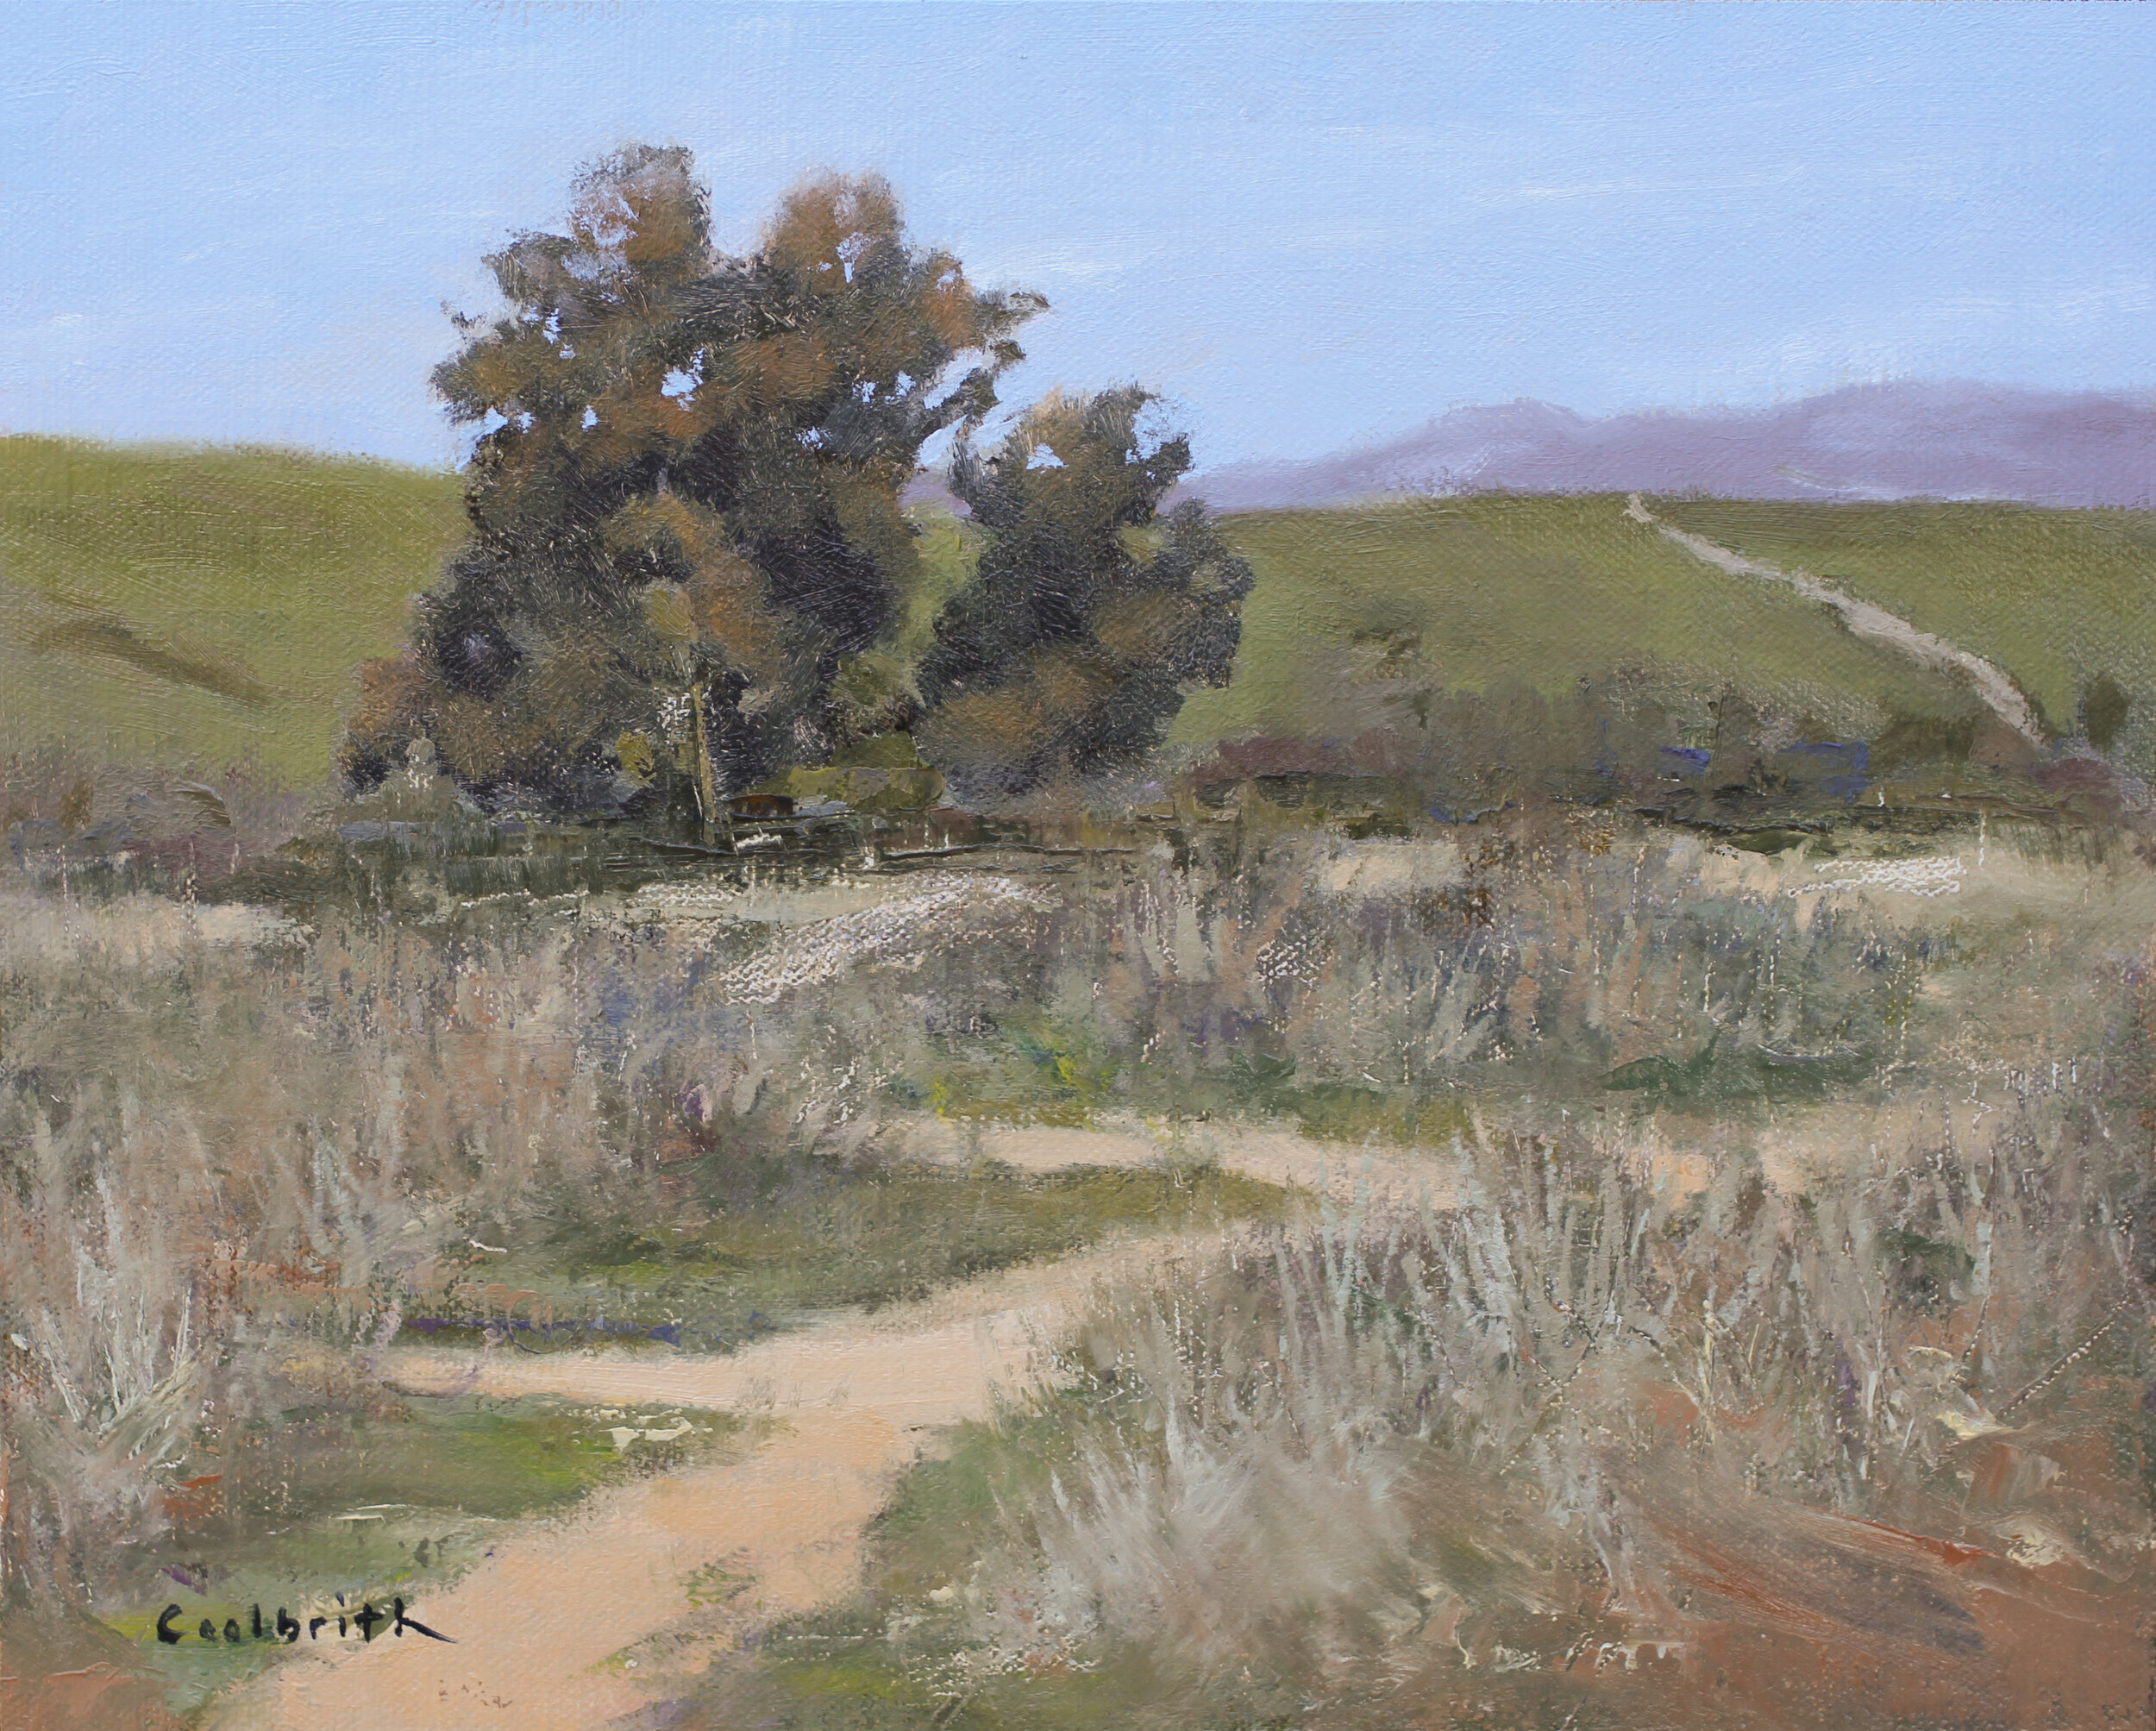 Daniel Jones, "Santa Maria Riverbed Trails," Oil on canvas